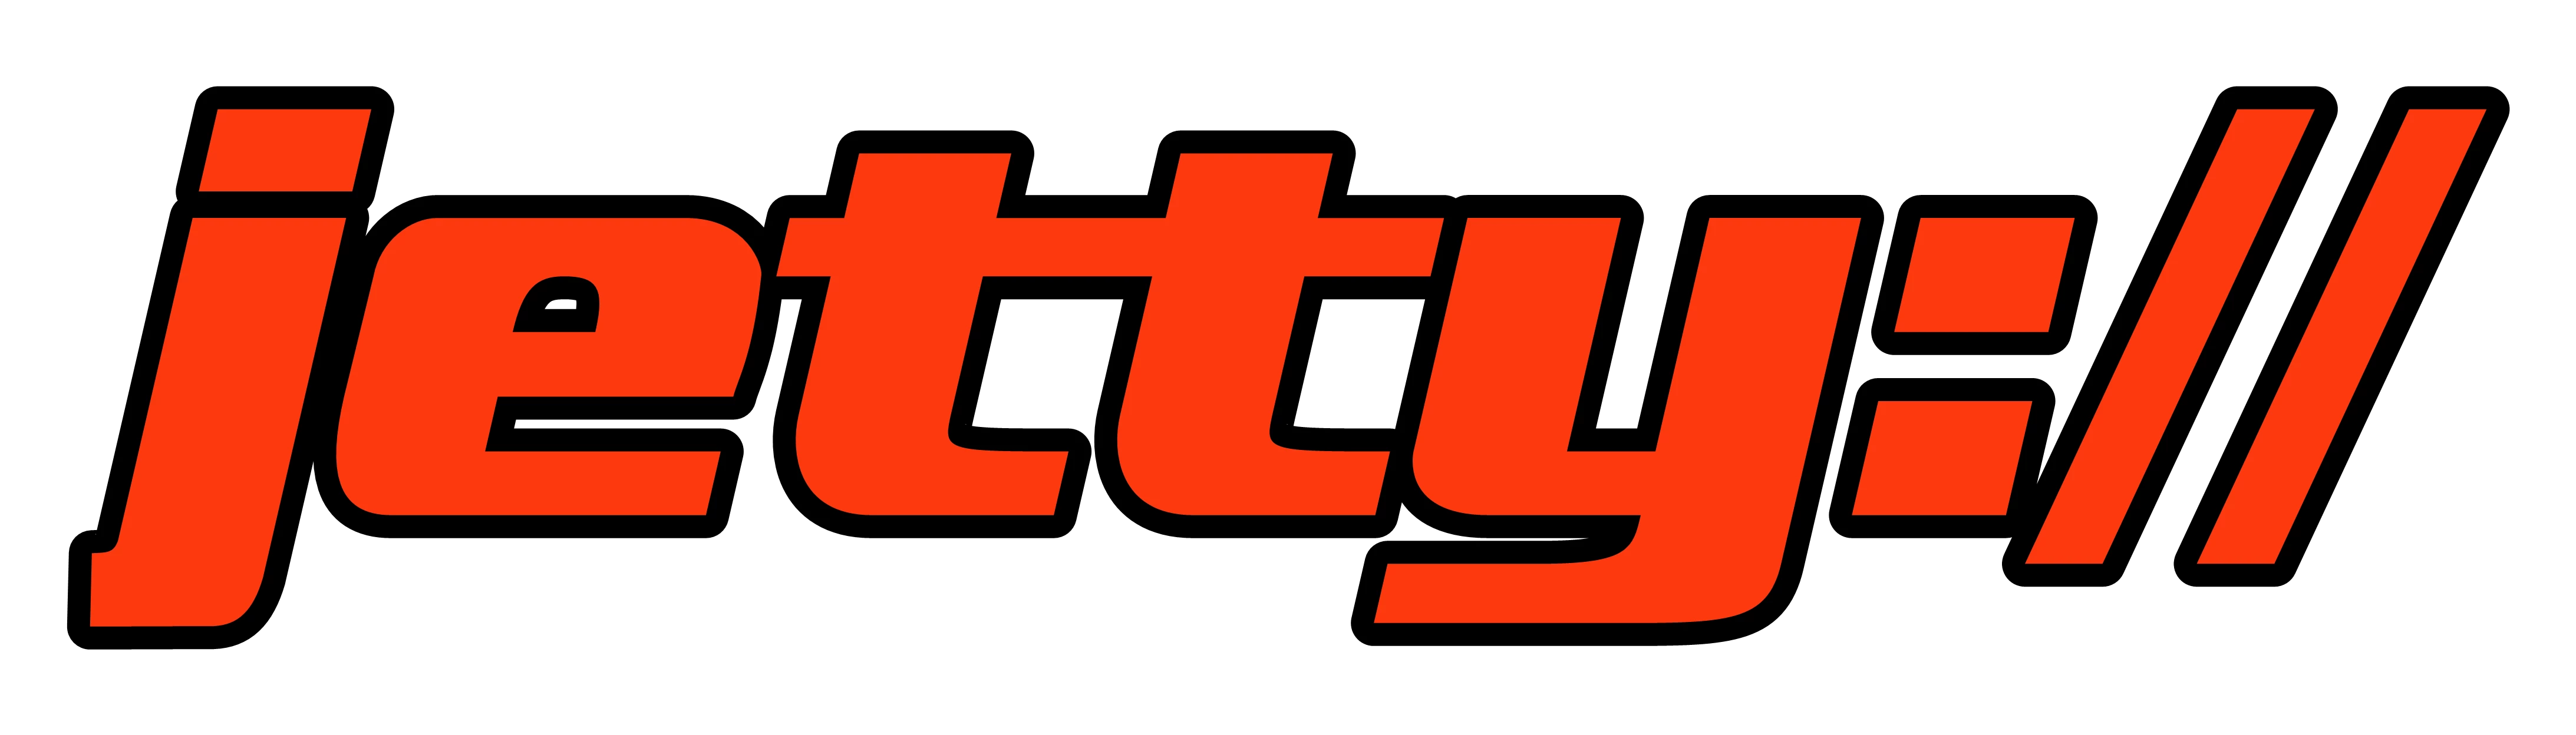 Jetty ロゴ